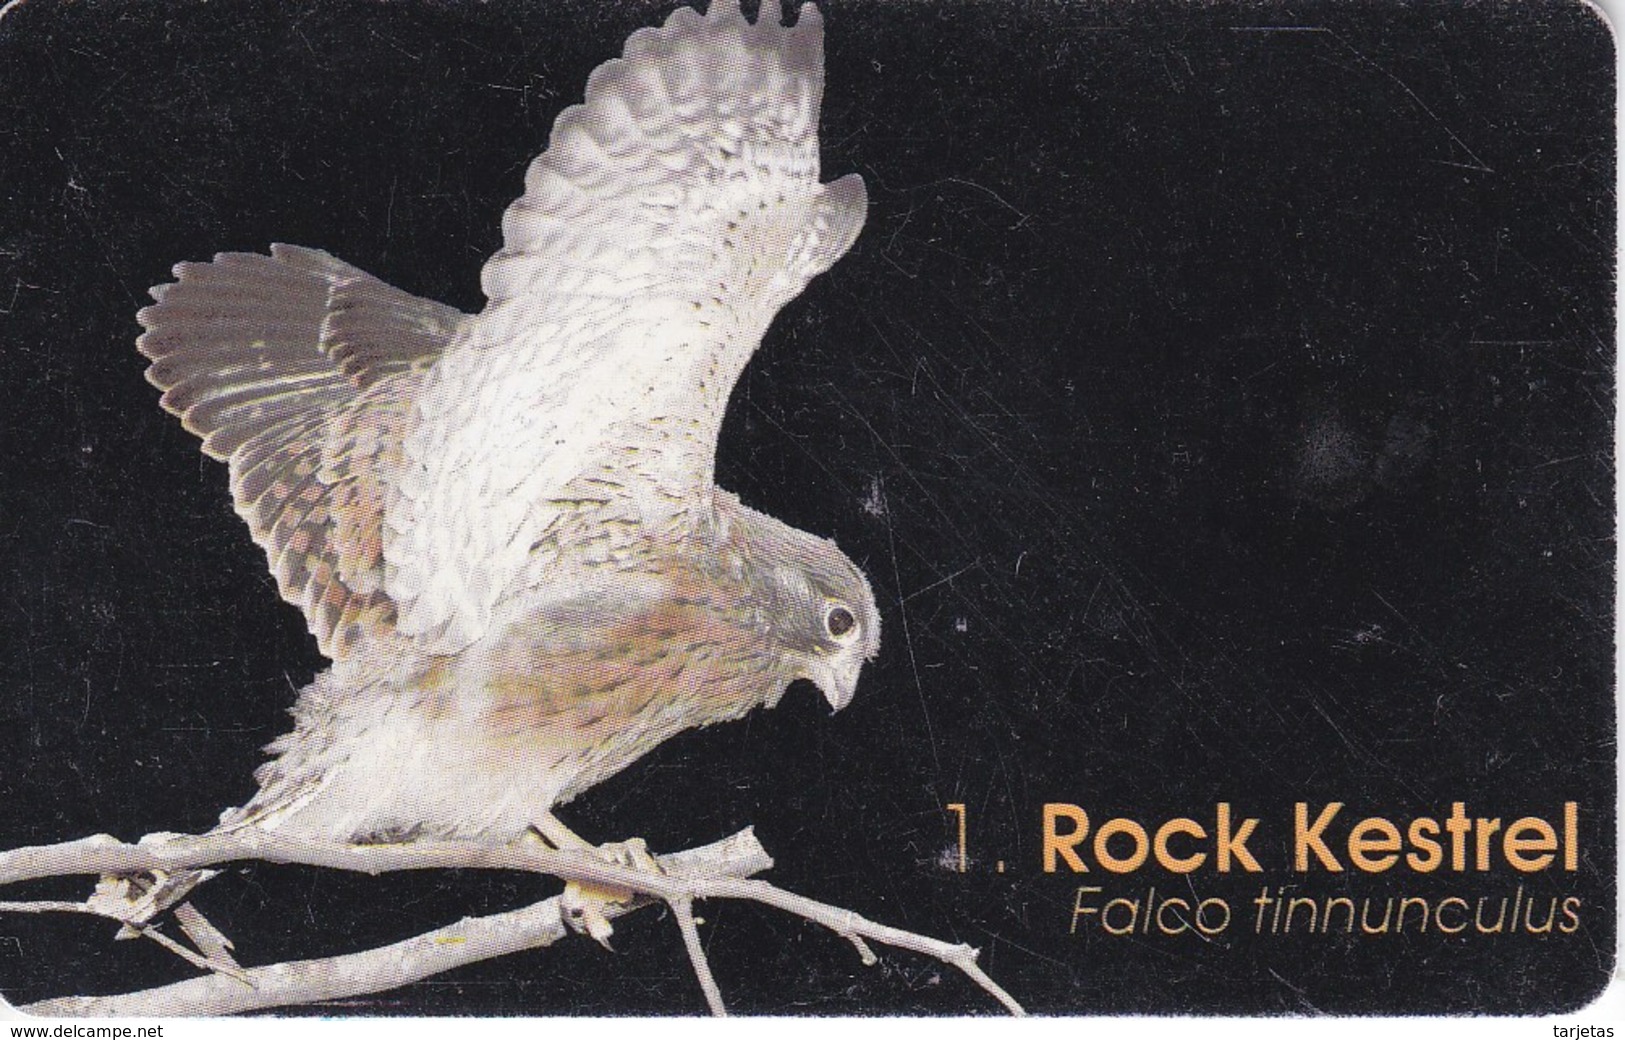 TARJETA DE NAMIBIA DE UN ROCK KESTREL  (BIRD-PAJARO) CERNICALO - Eagles & Birds Of Prey